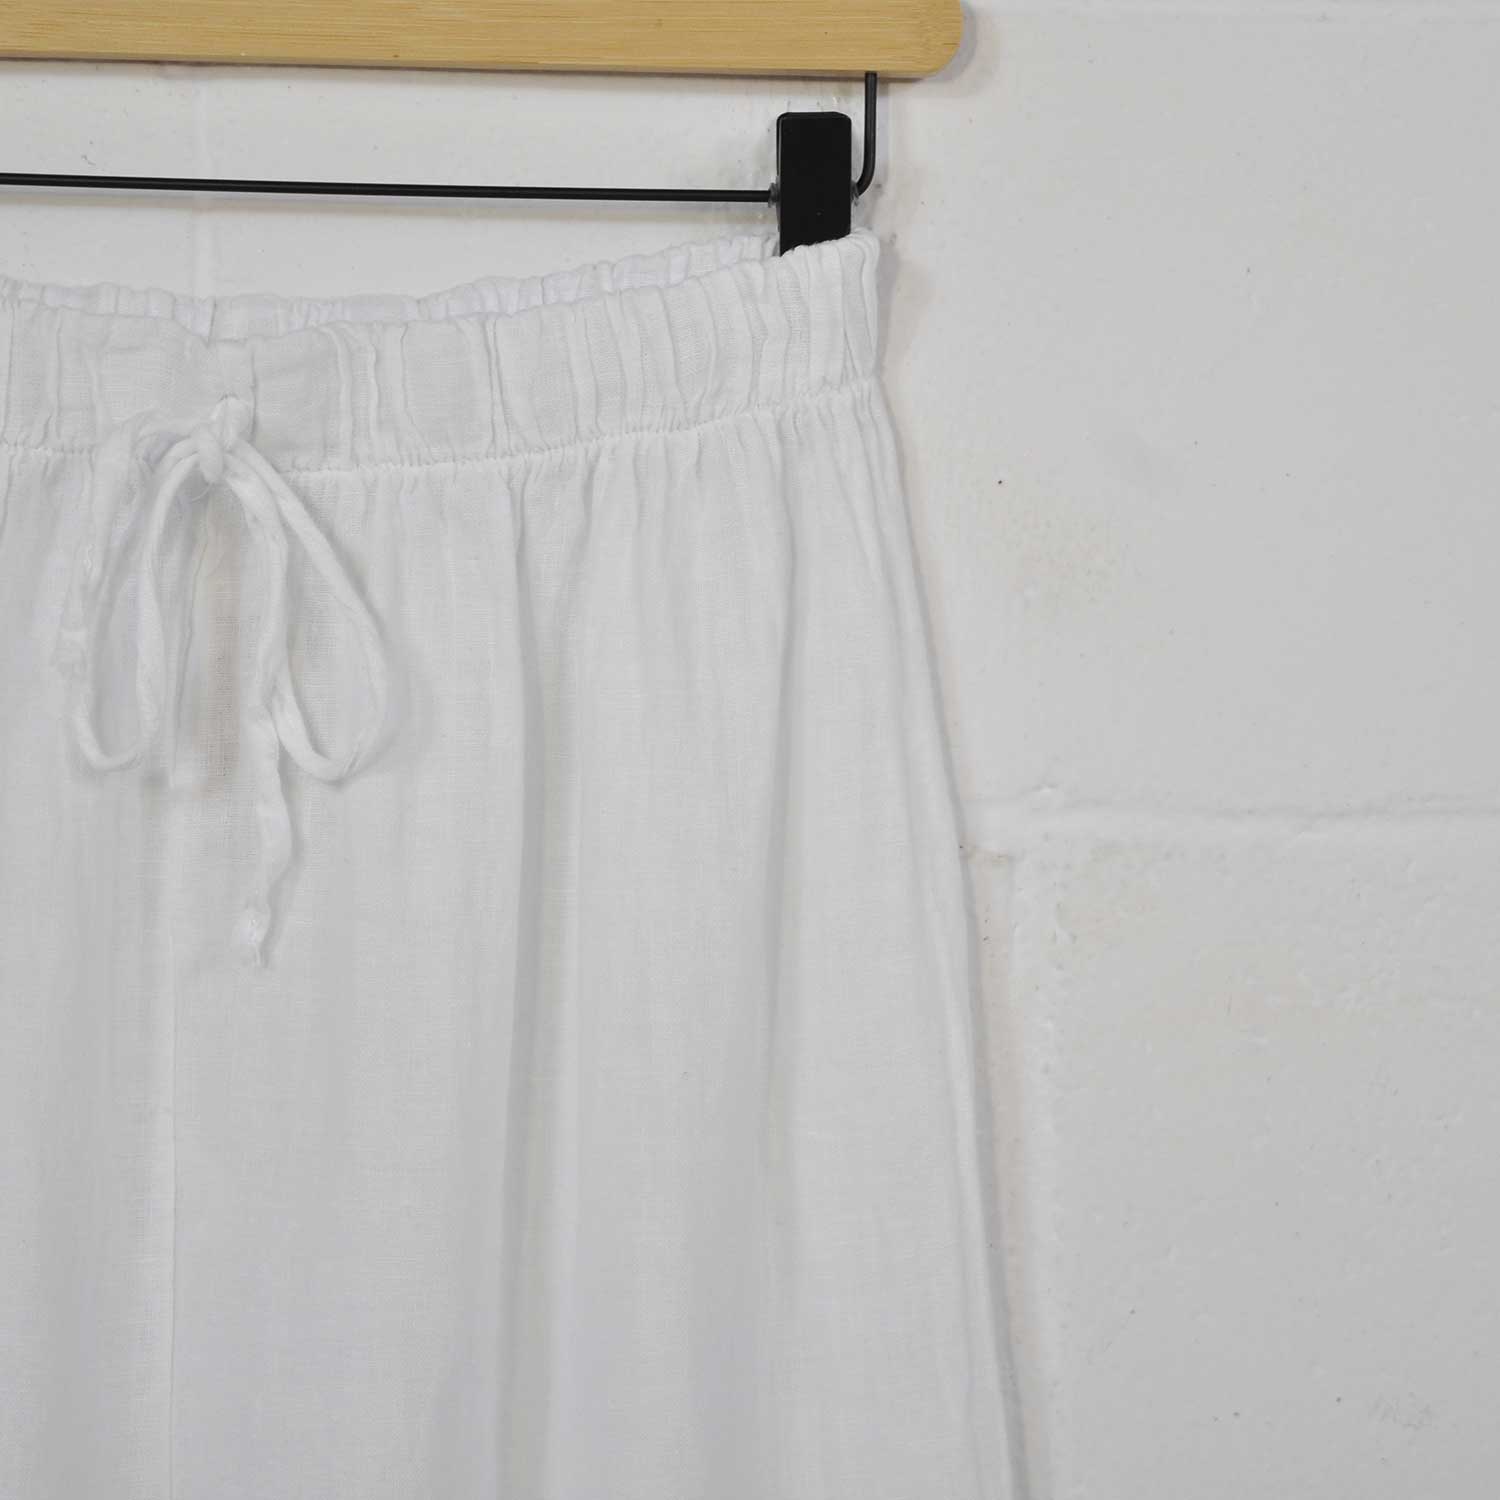 Pantalon large lin blanc